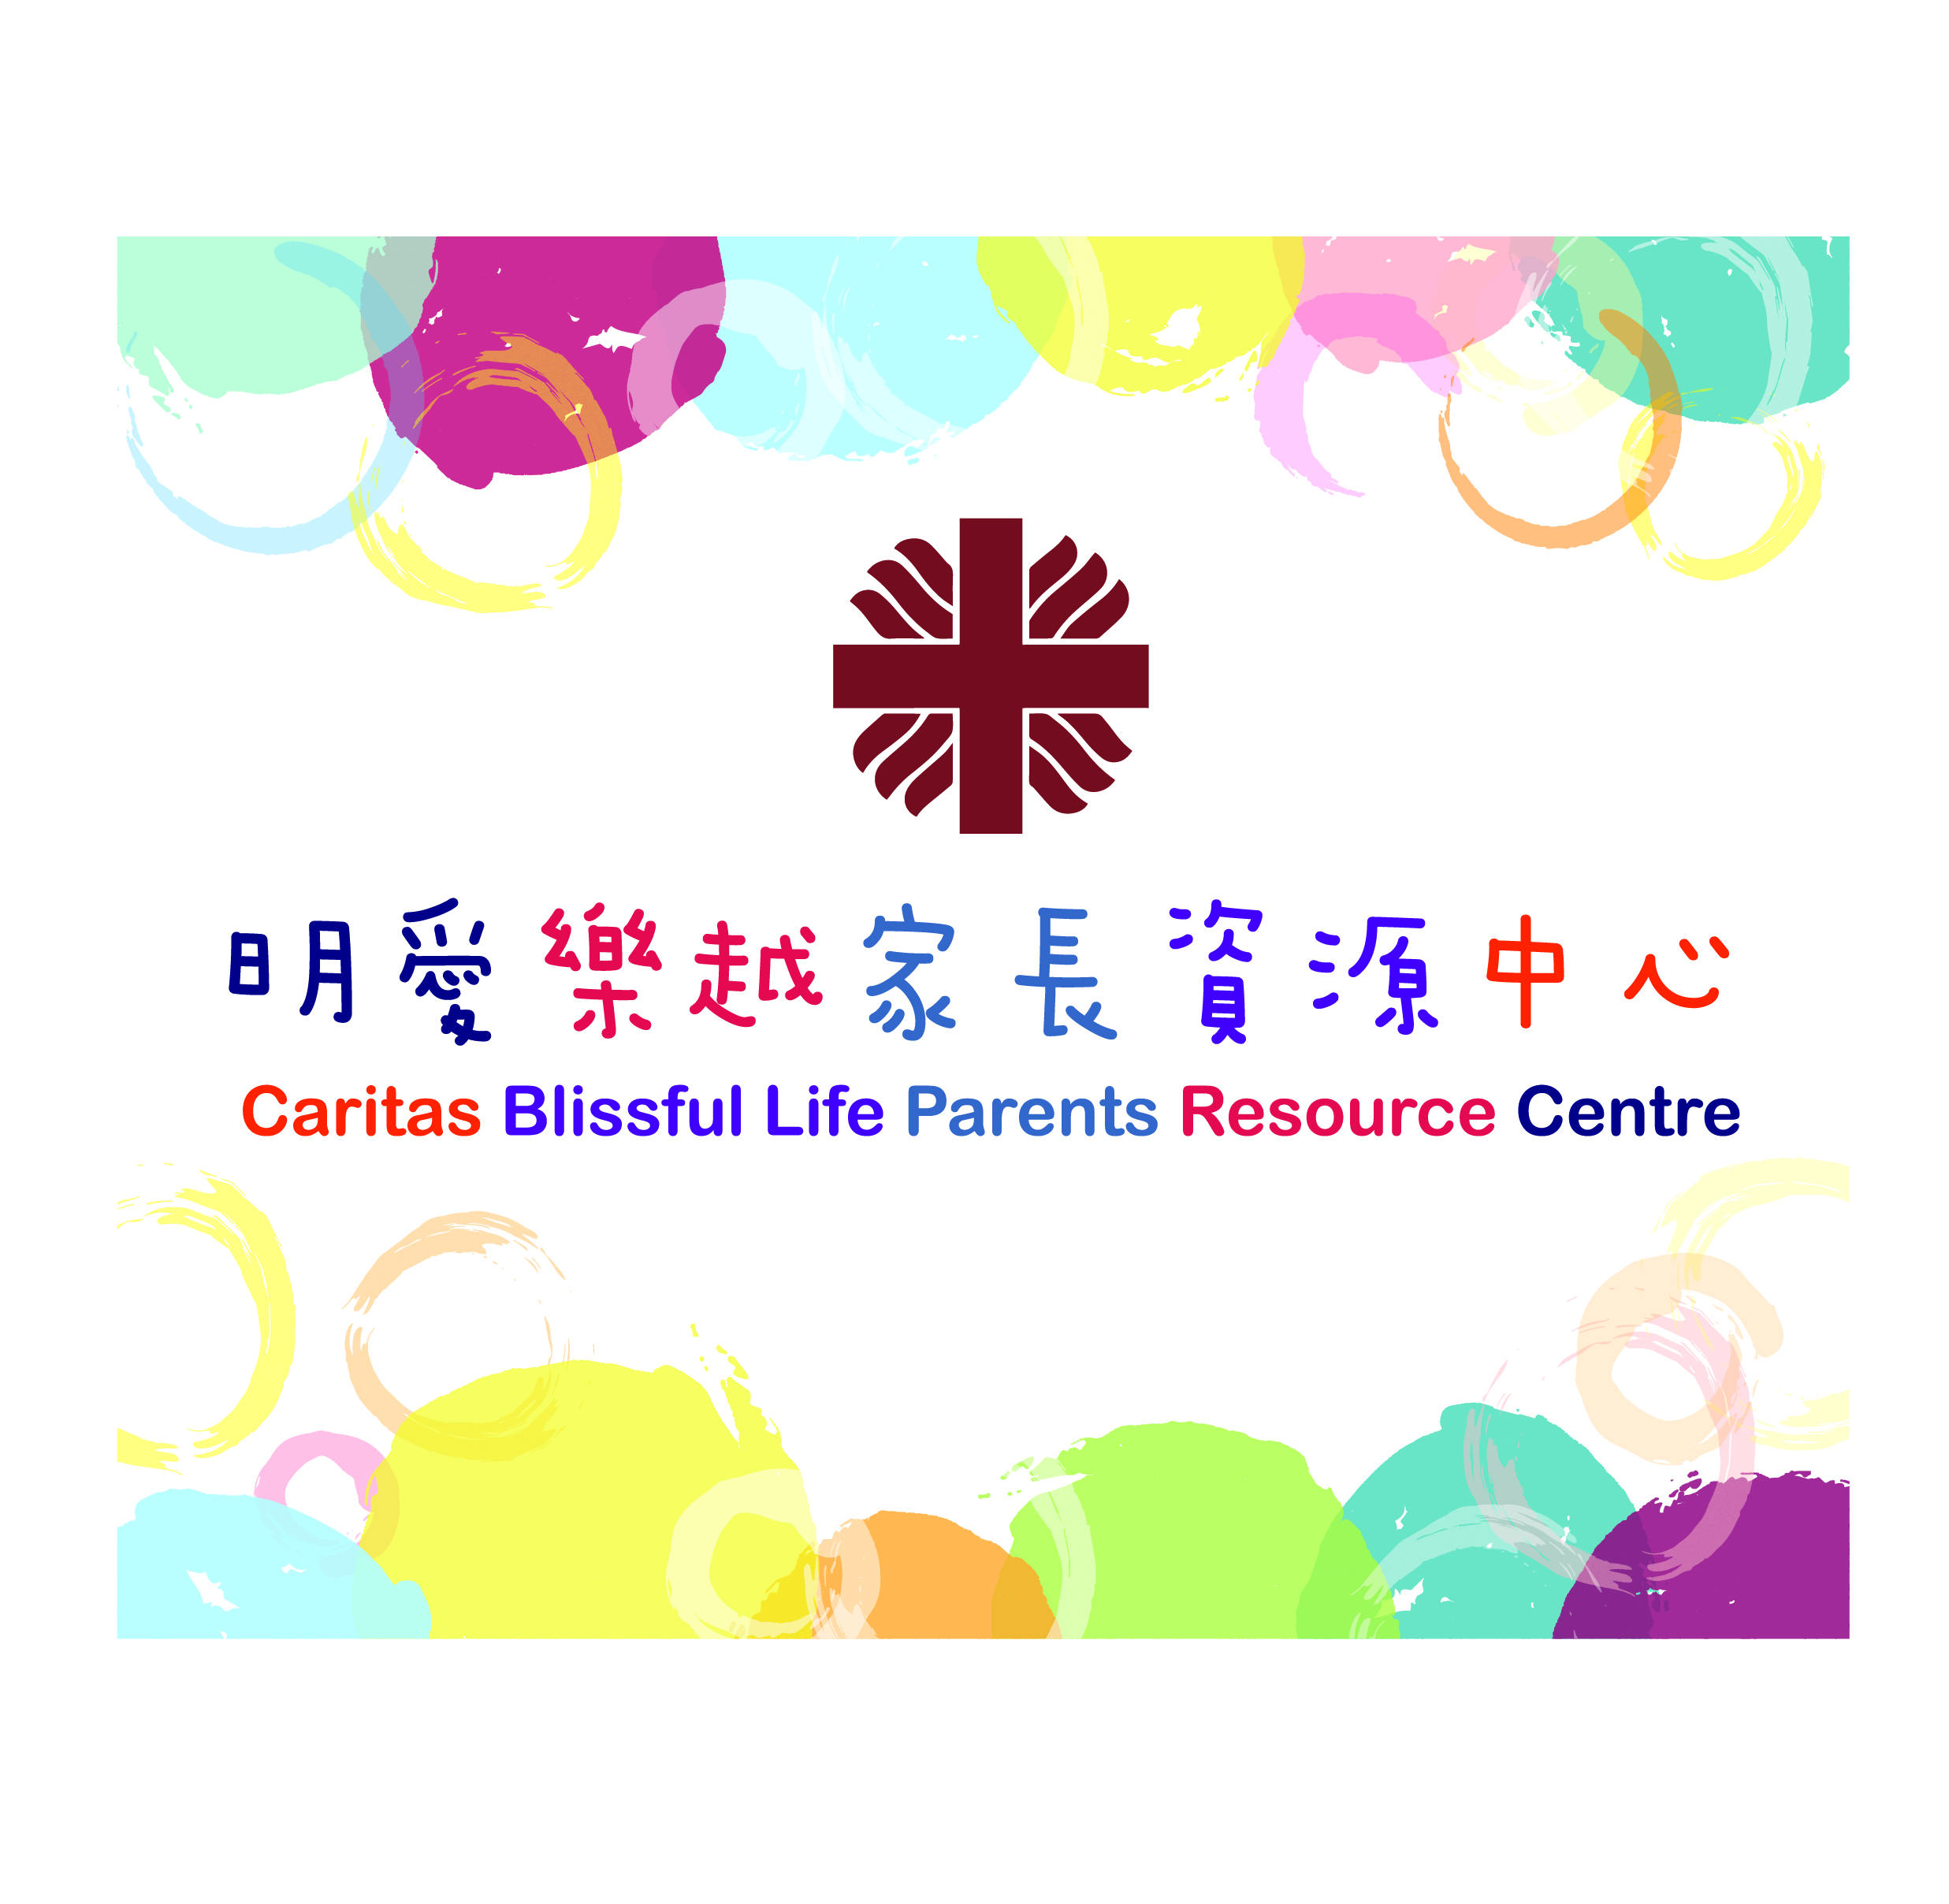 Caritas Blissful Life Parents Resource Centre